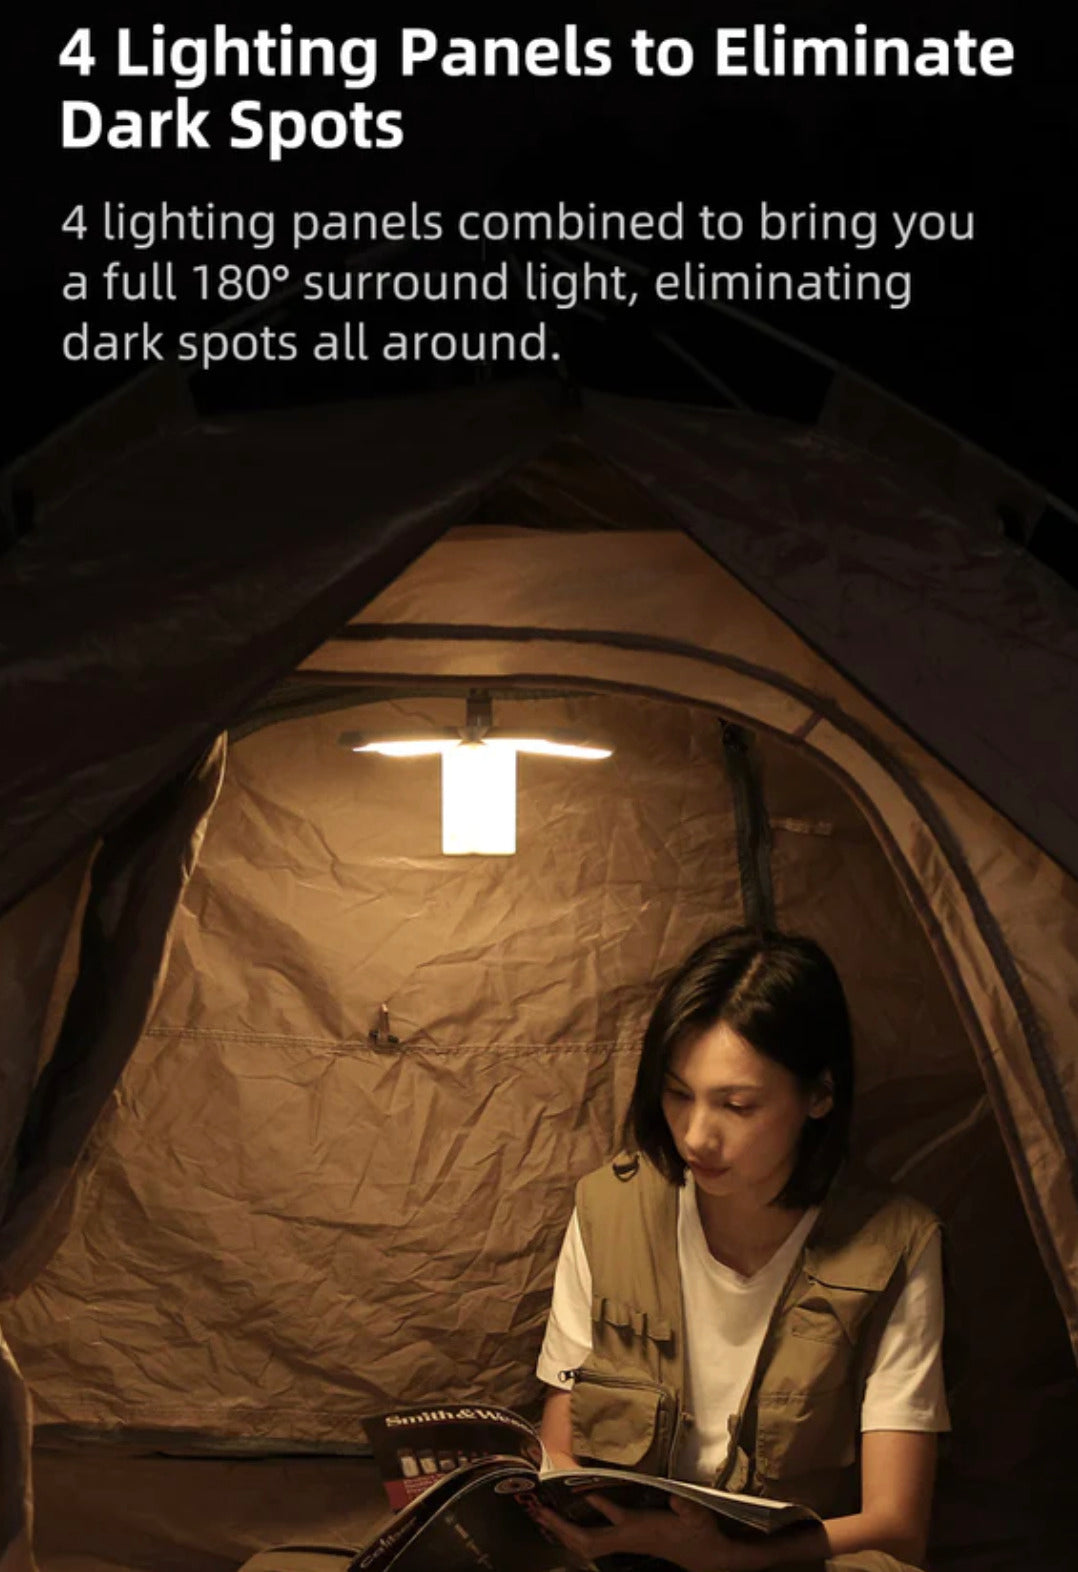 Klarus CL2 Pro Folding Camping Lantern + Flashlight + Power Bank (14,000mAh)